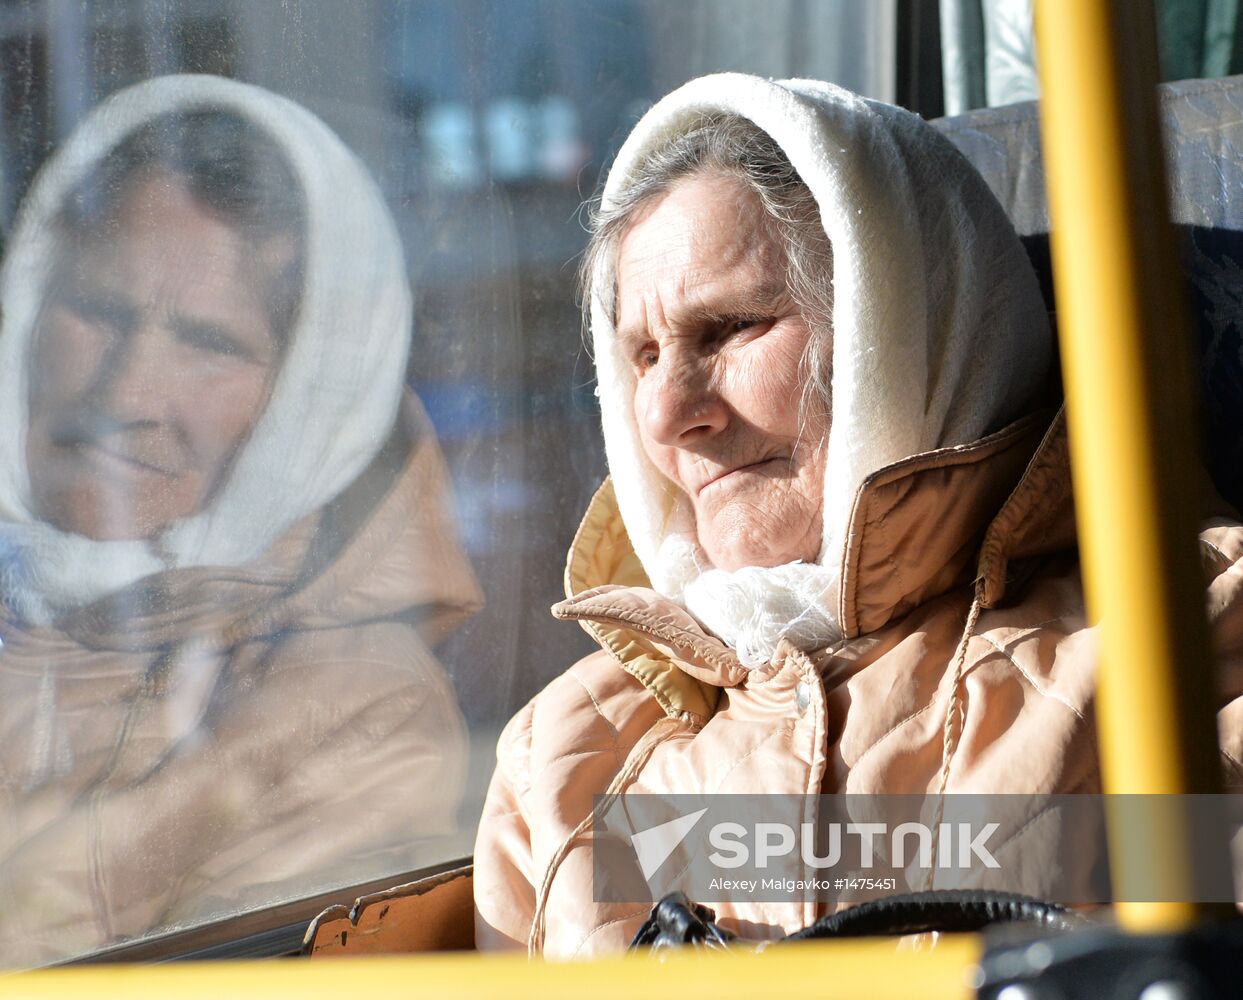 Riding commuter bus in Omsk Region